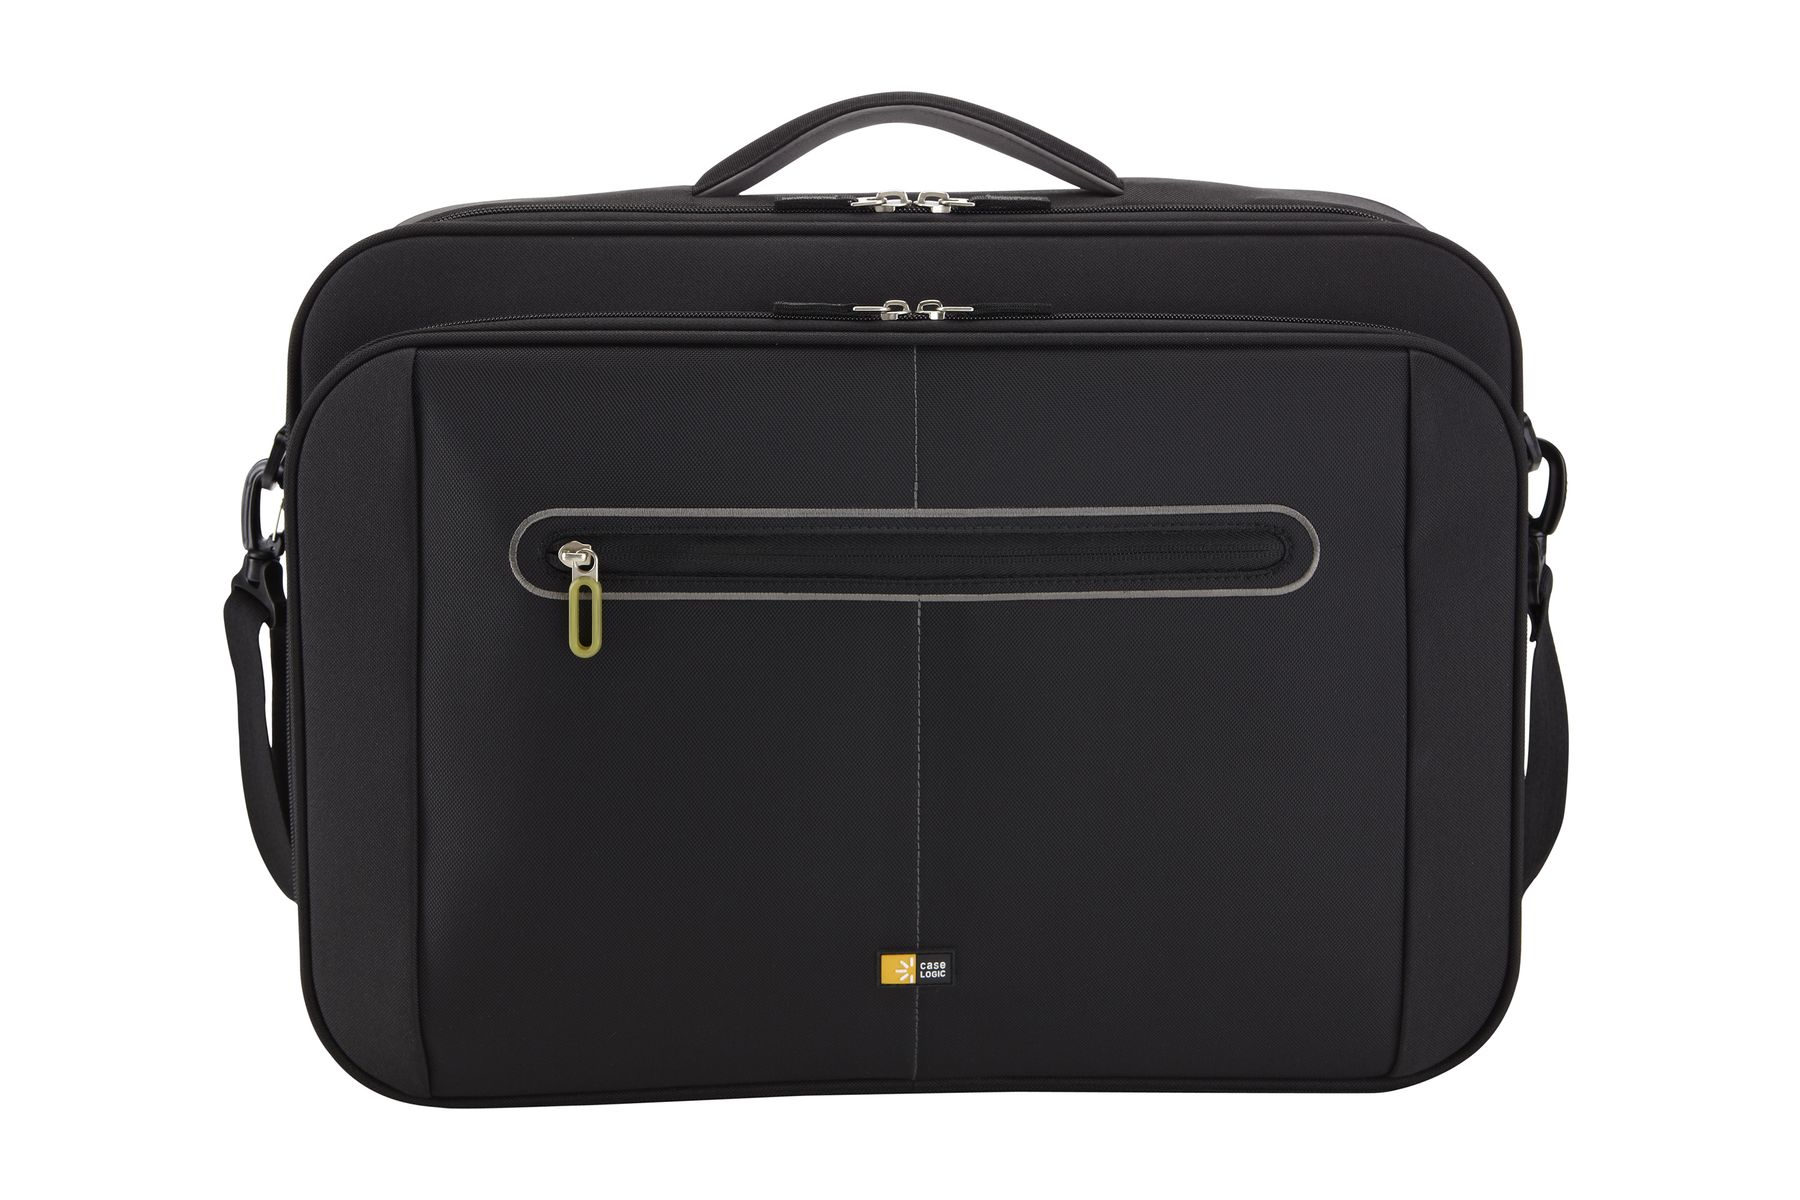 Case Logic 18" Laptop Briefcase